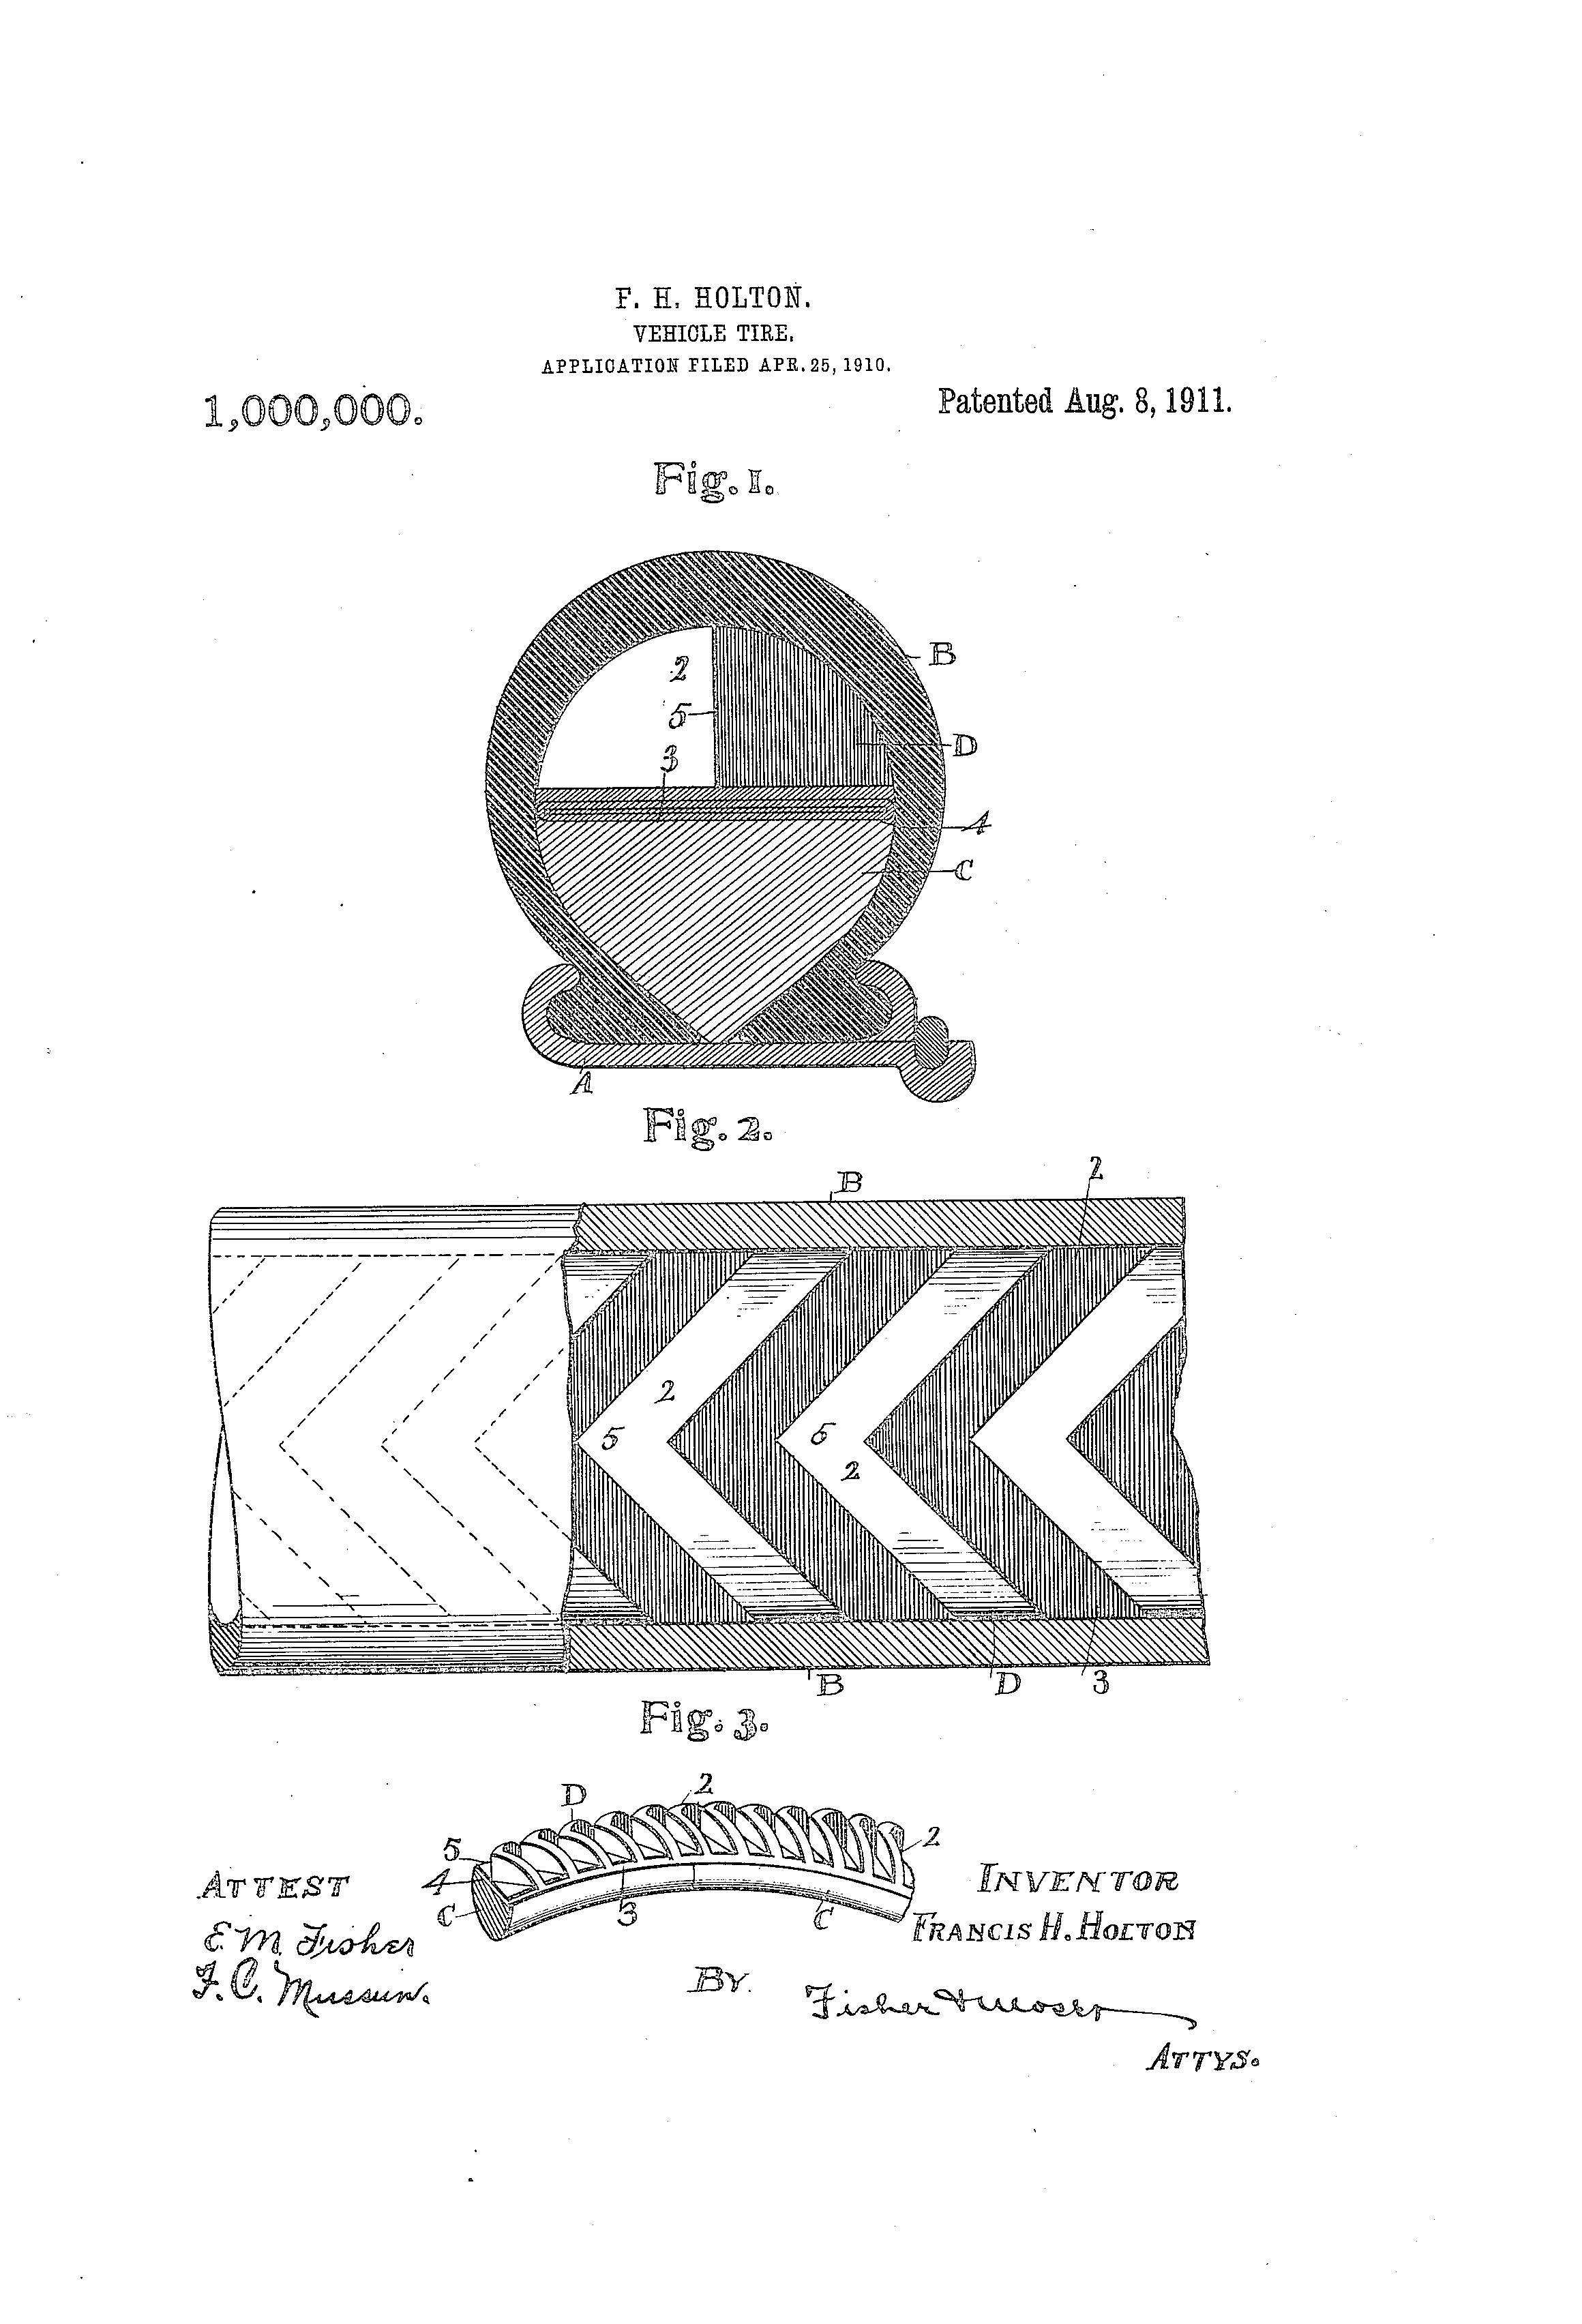 Vehicle Tire Patent